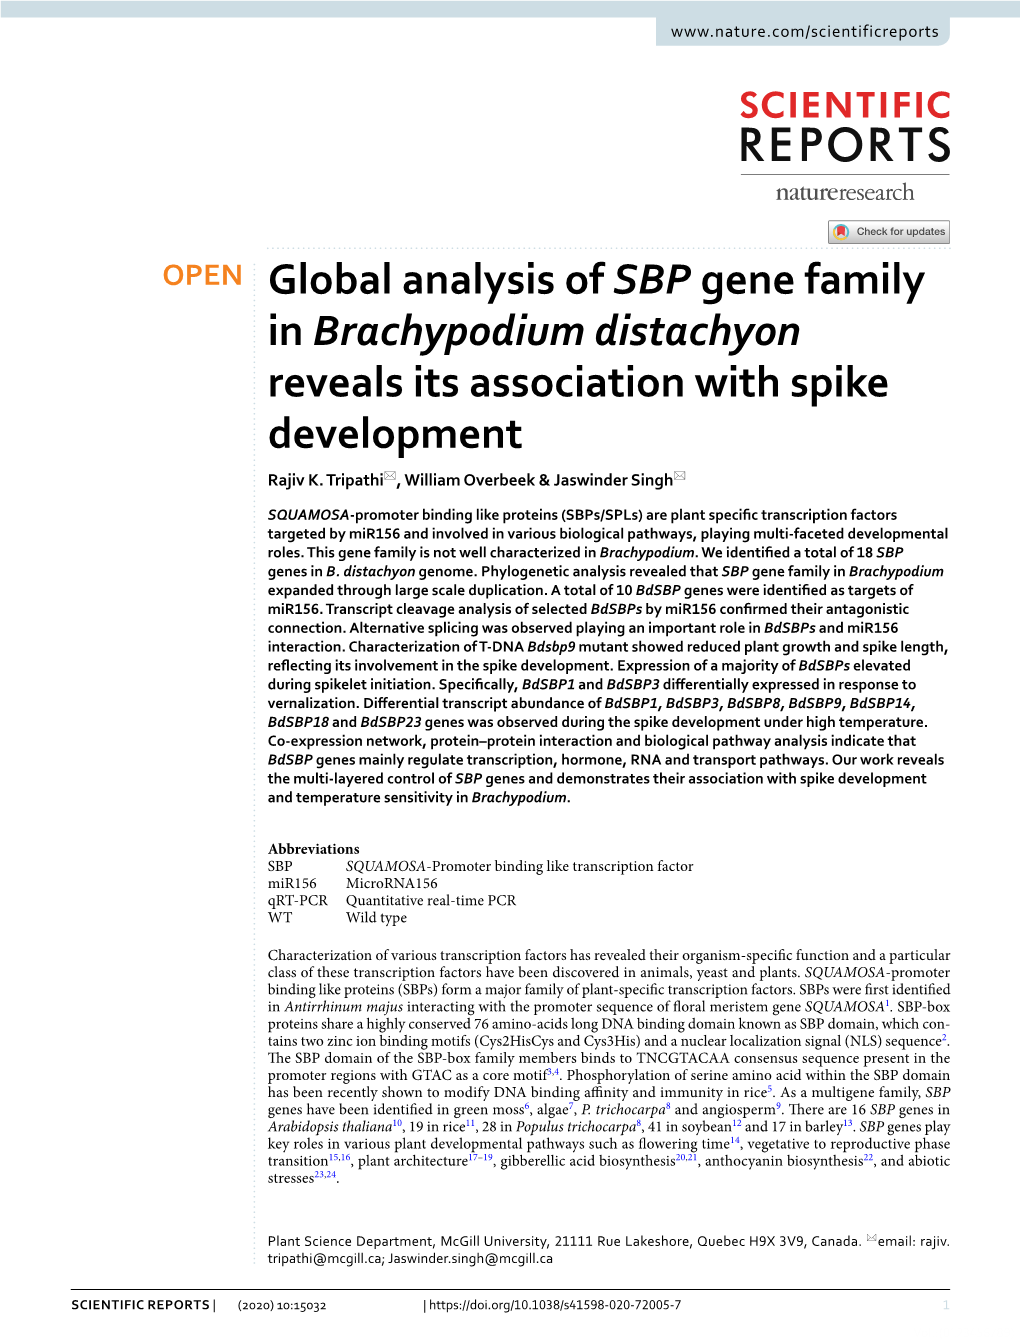 Global Analysis of SBP Gene Family in Brachypodium Distachyon Reveals Its Association with Spike Development Rajiv K